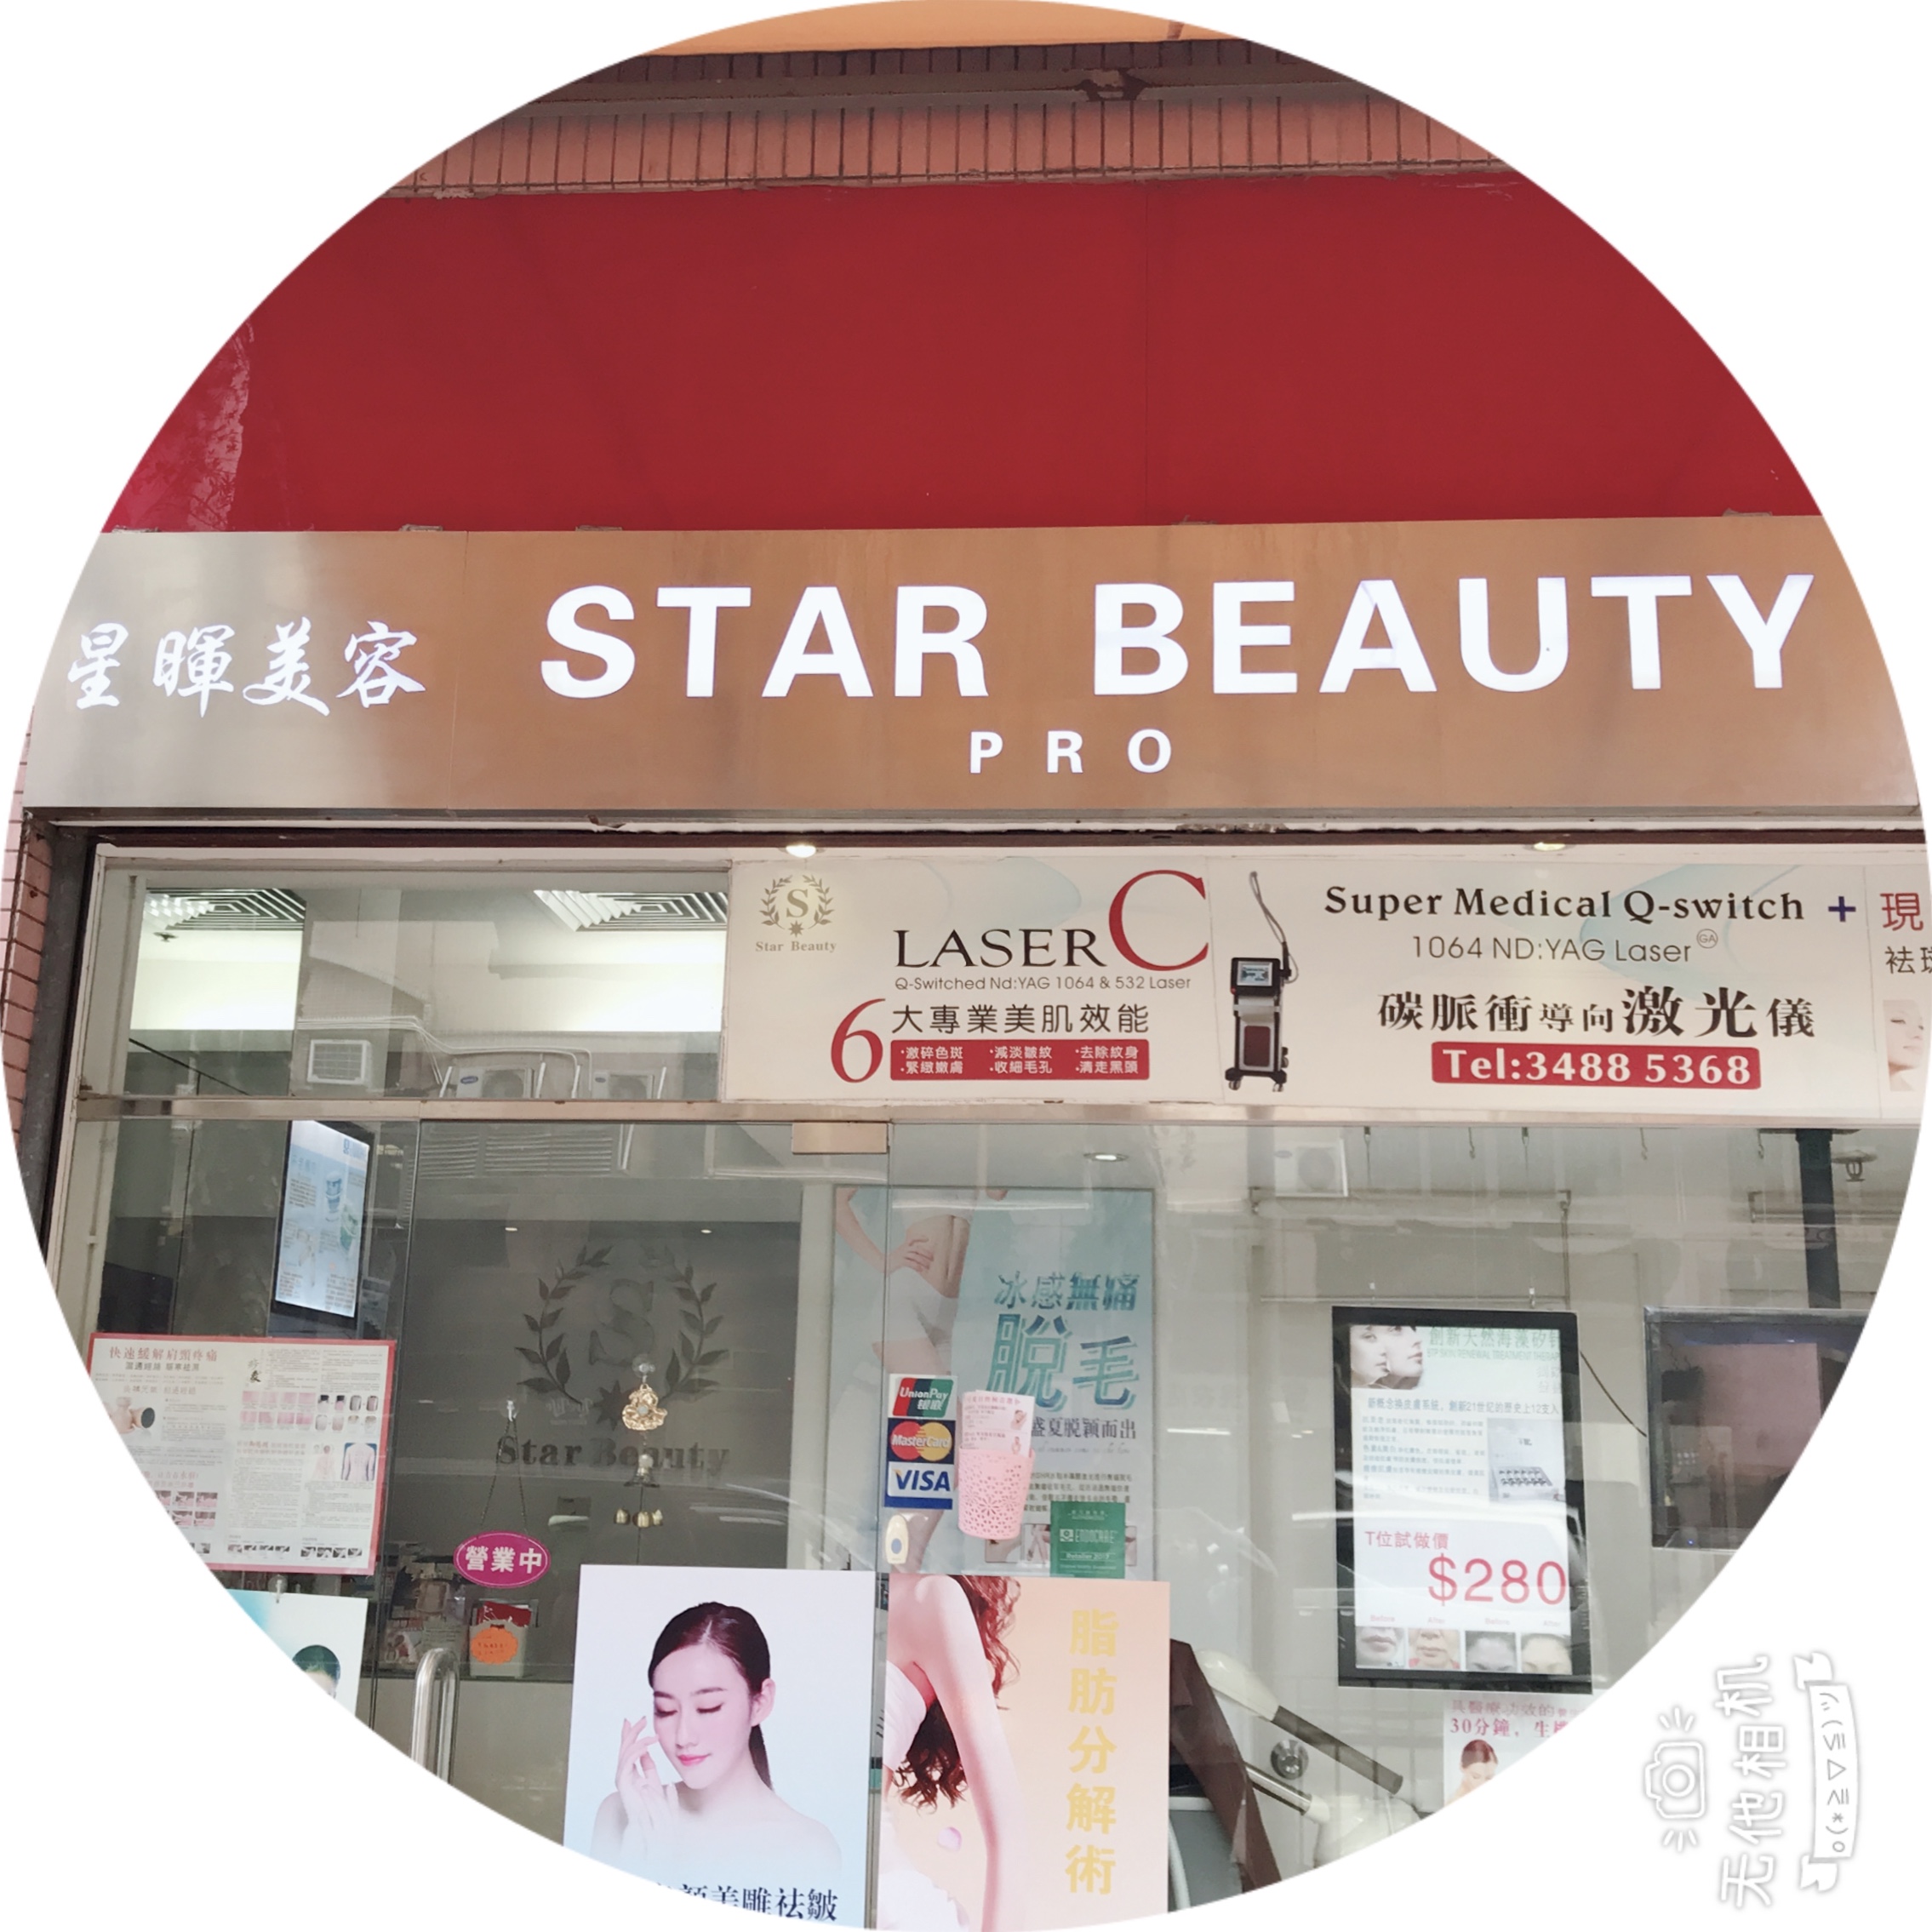 Hong Kong Beauty Salon Beauty Salon / Beautician: 星暉美容 STAR BEAUTY